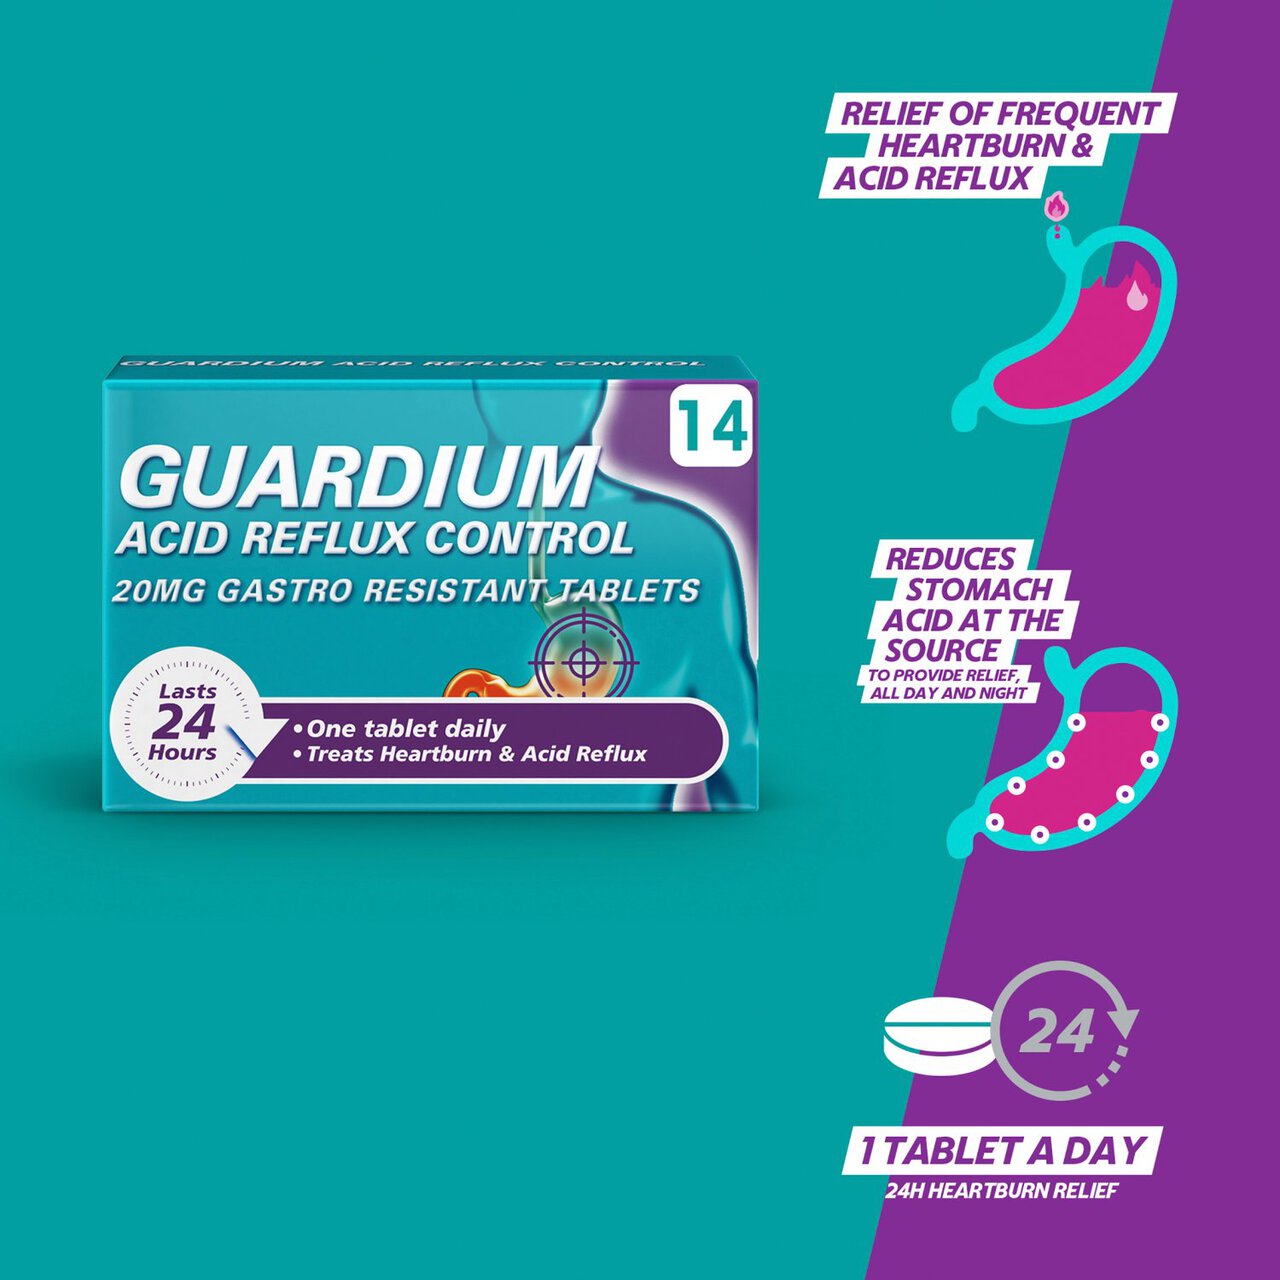 Guardium Acid Reflux Control Gastro Resistant Tablets 14 per pack